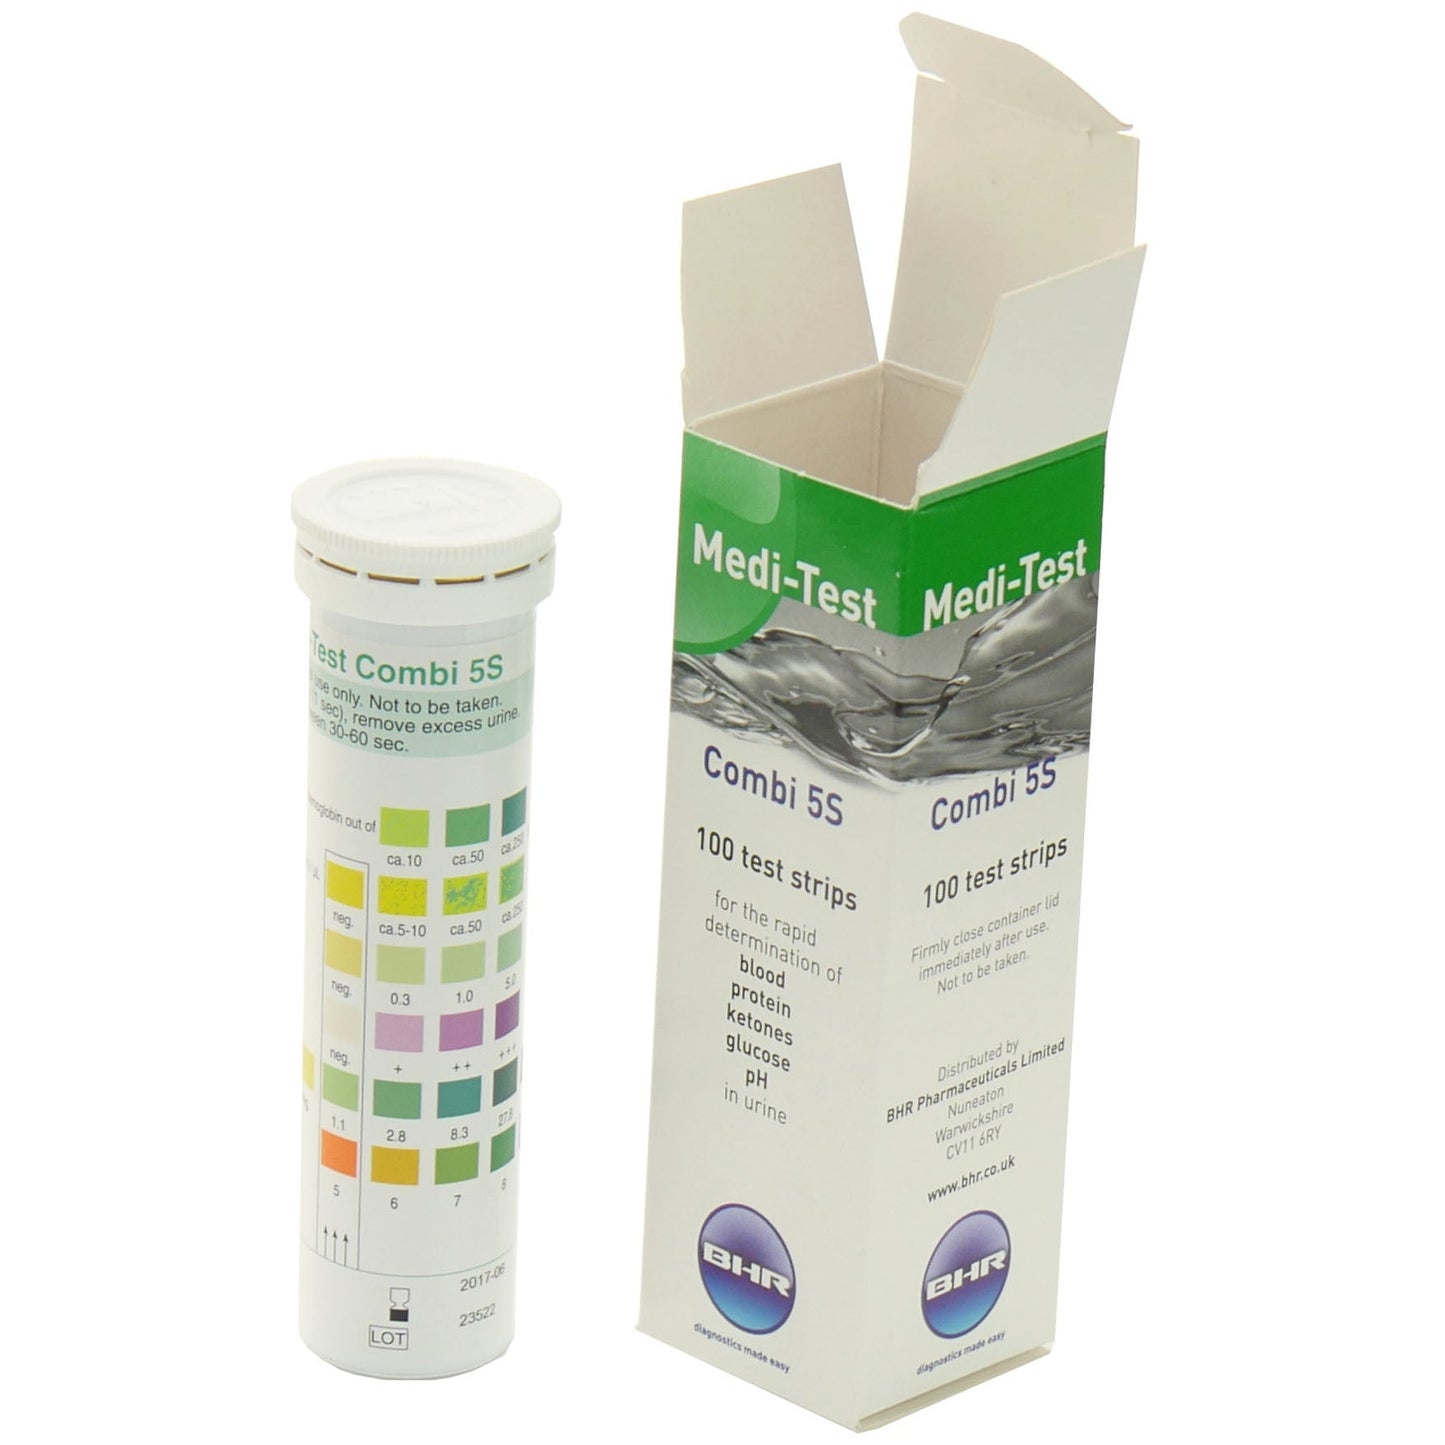 Medi-Test Combi 5s Urine Test Strips x 100